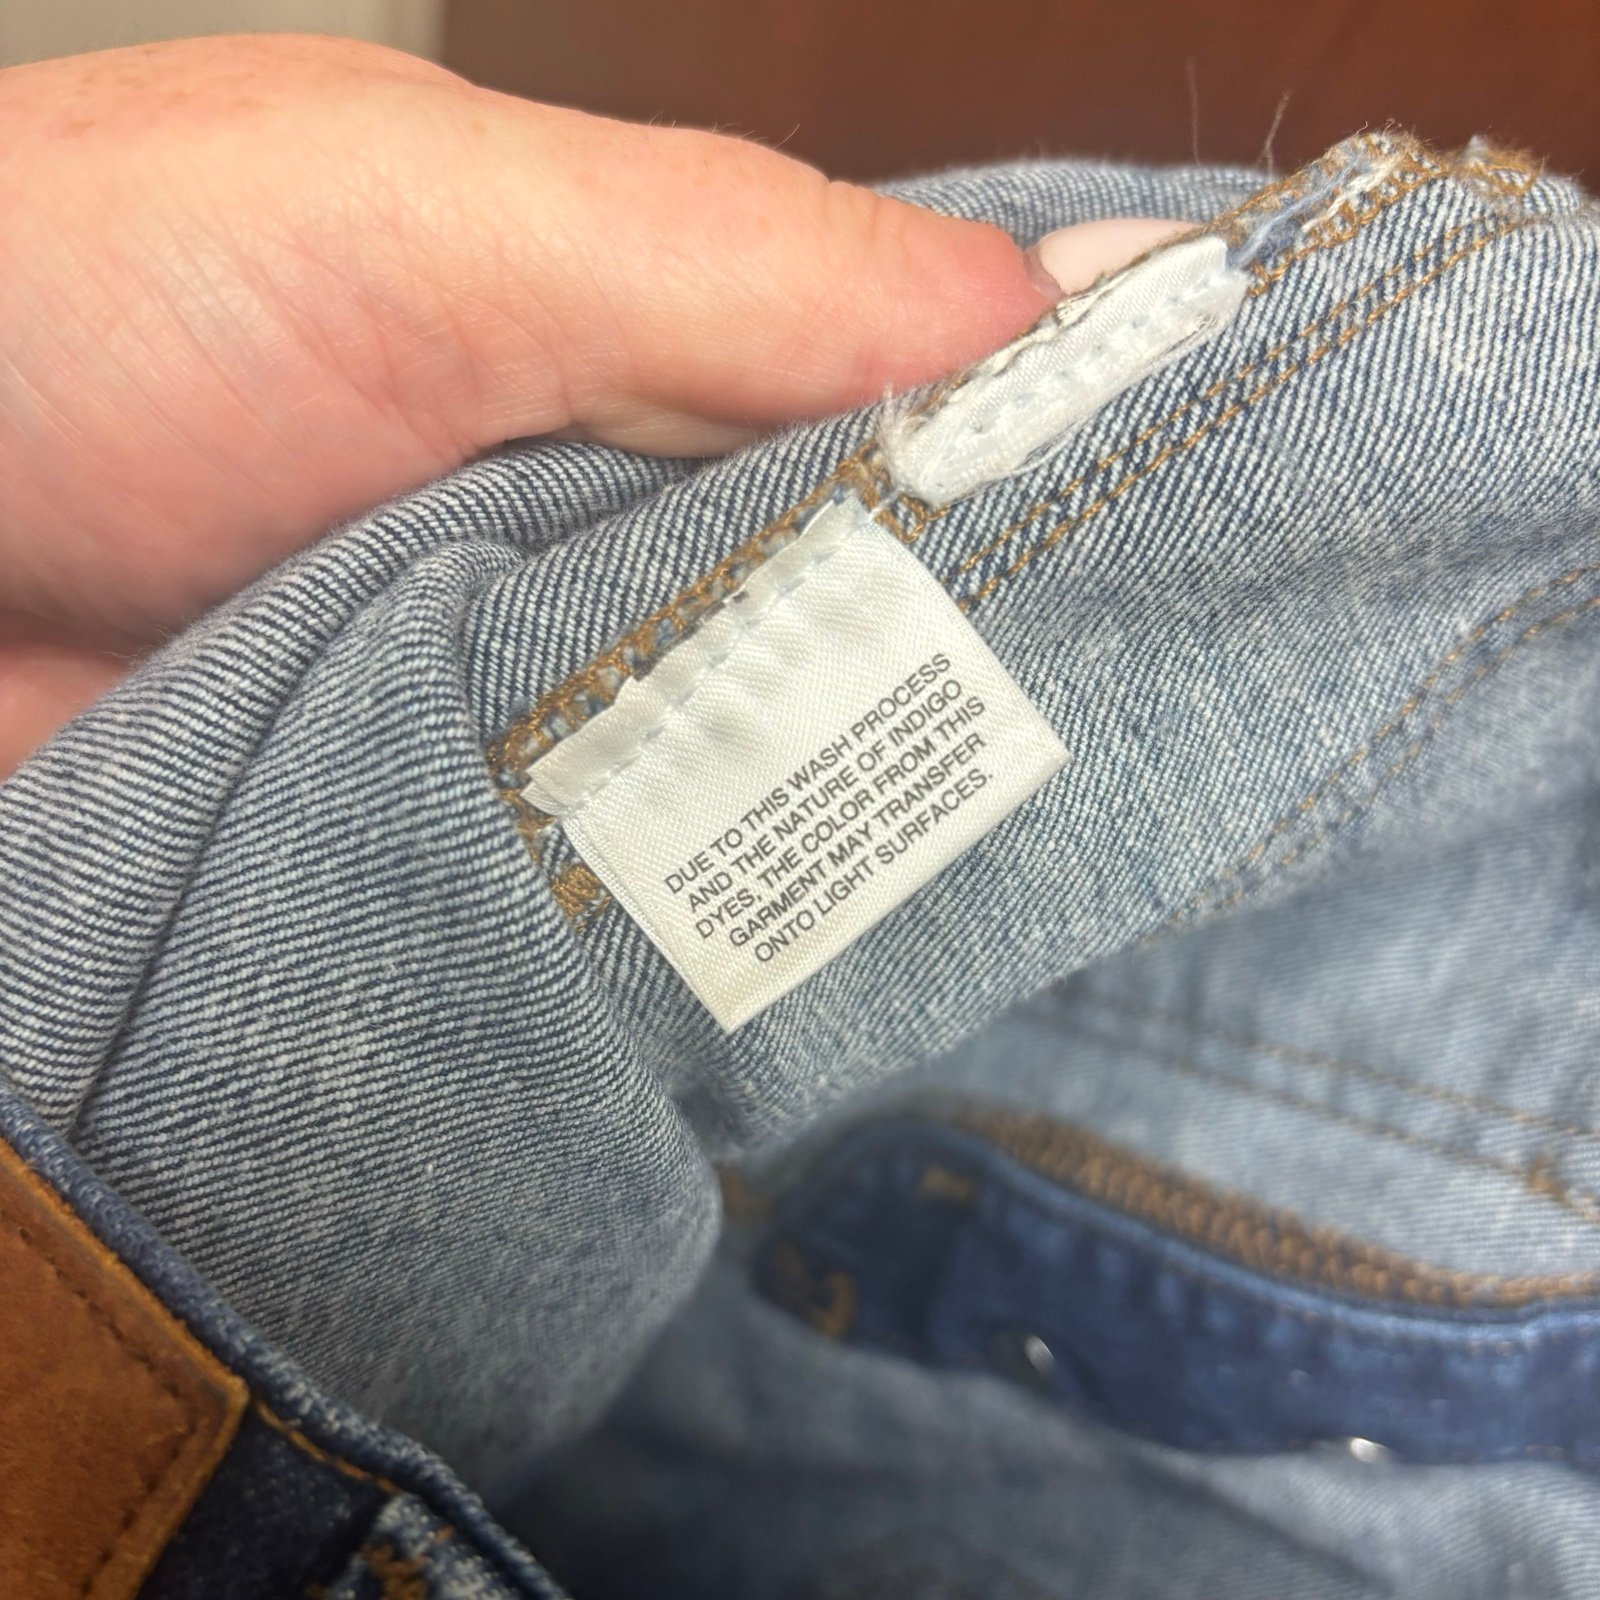 Buy Point Sur 10” Demi Boot Jeans iSu4AvwjM just buy it